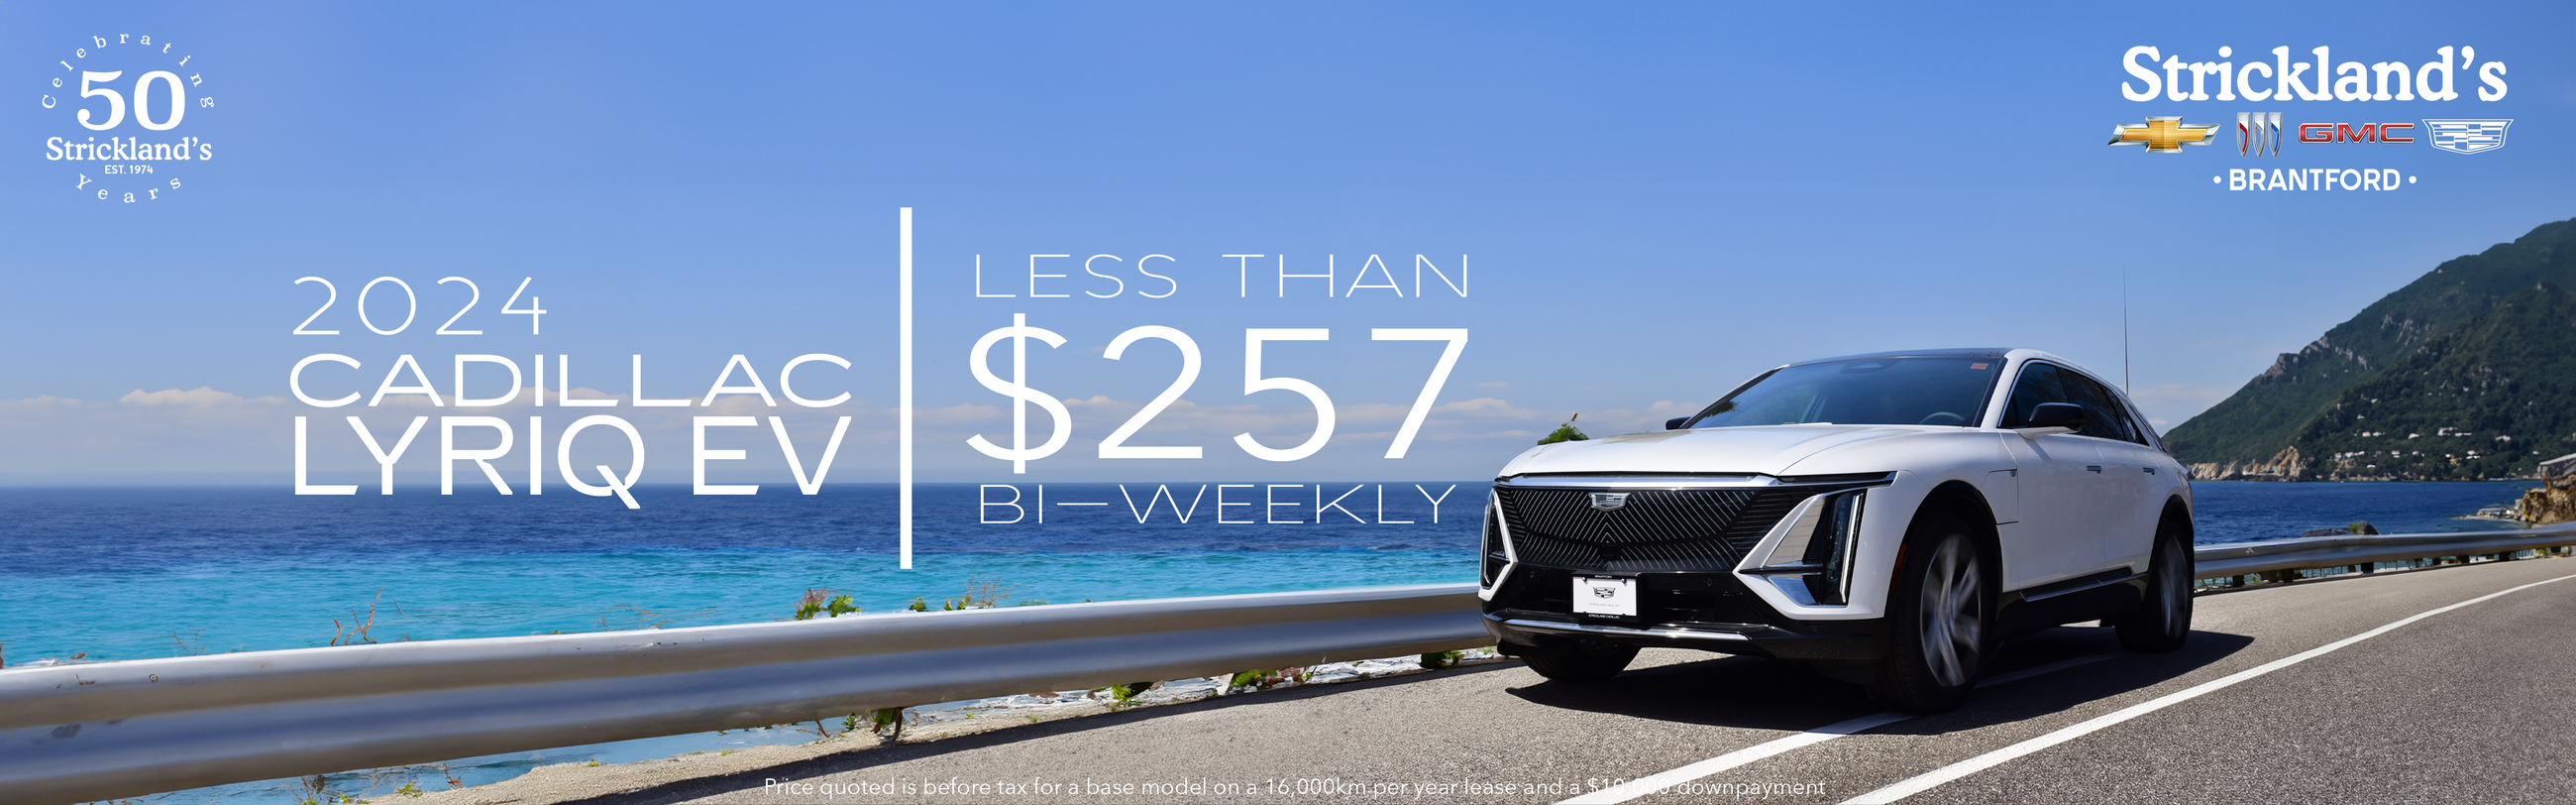 Cadillac Lyriq Less than $257 Bi-weekly